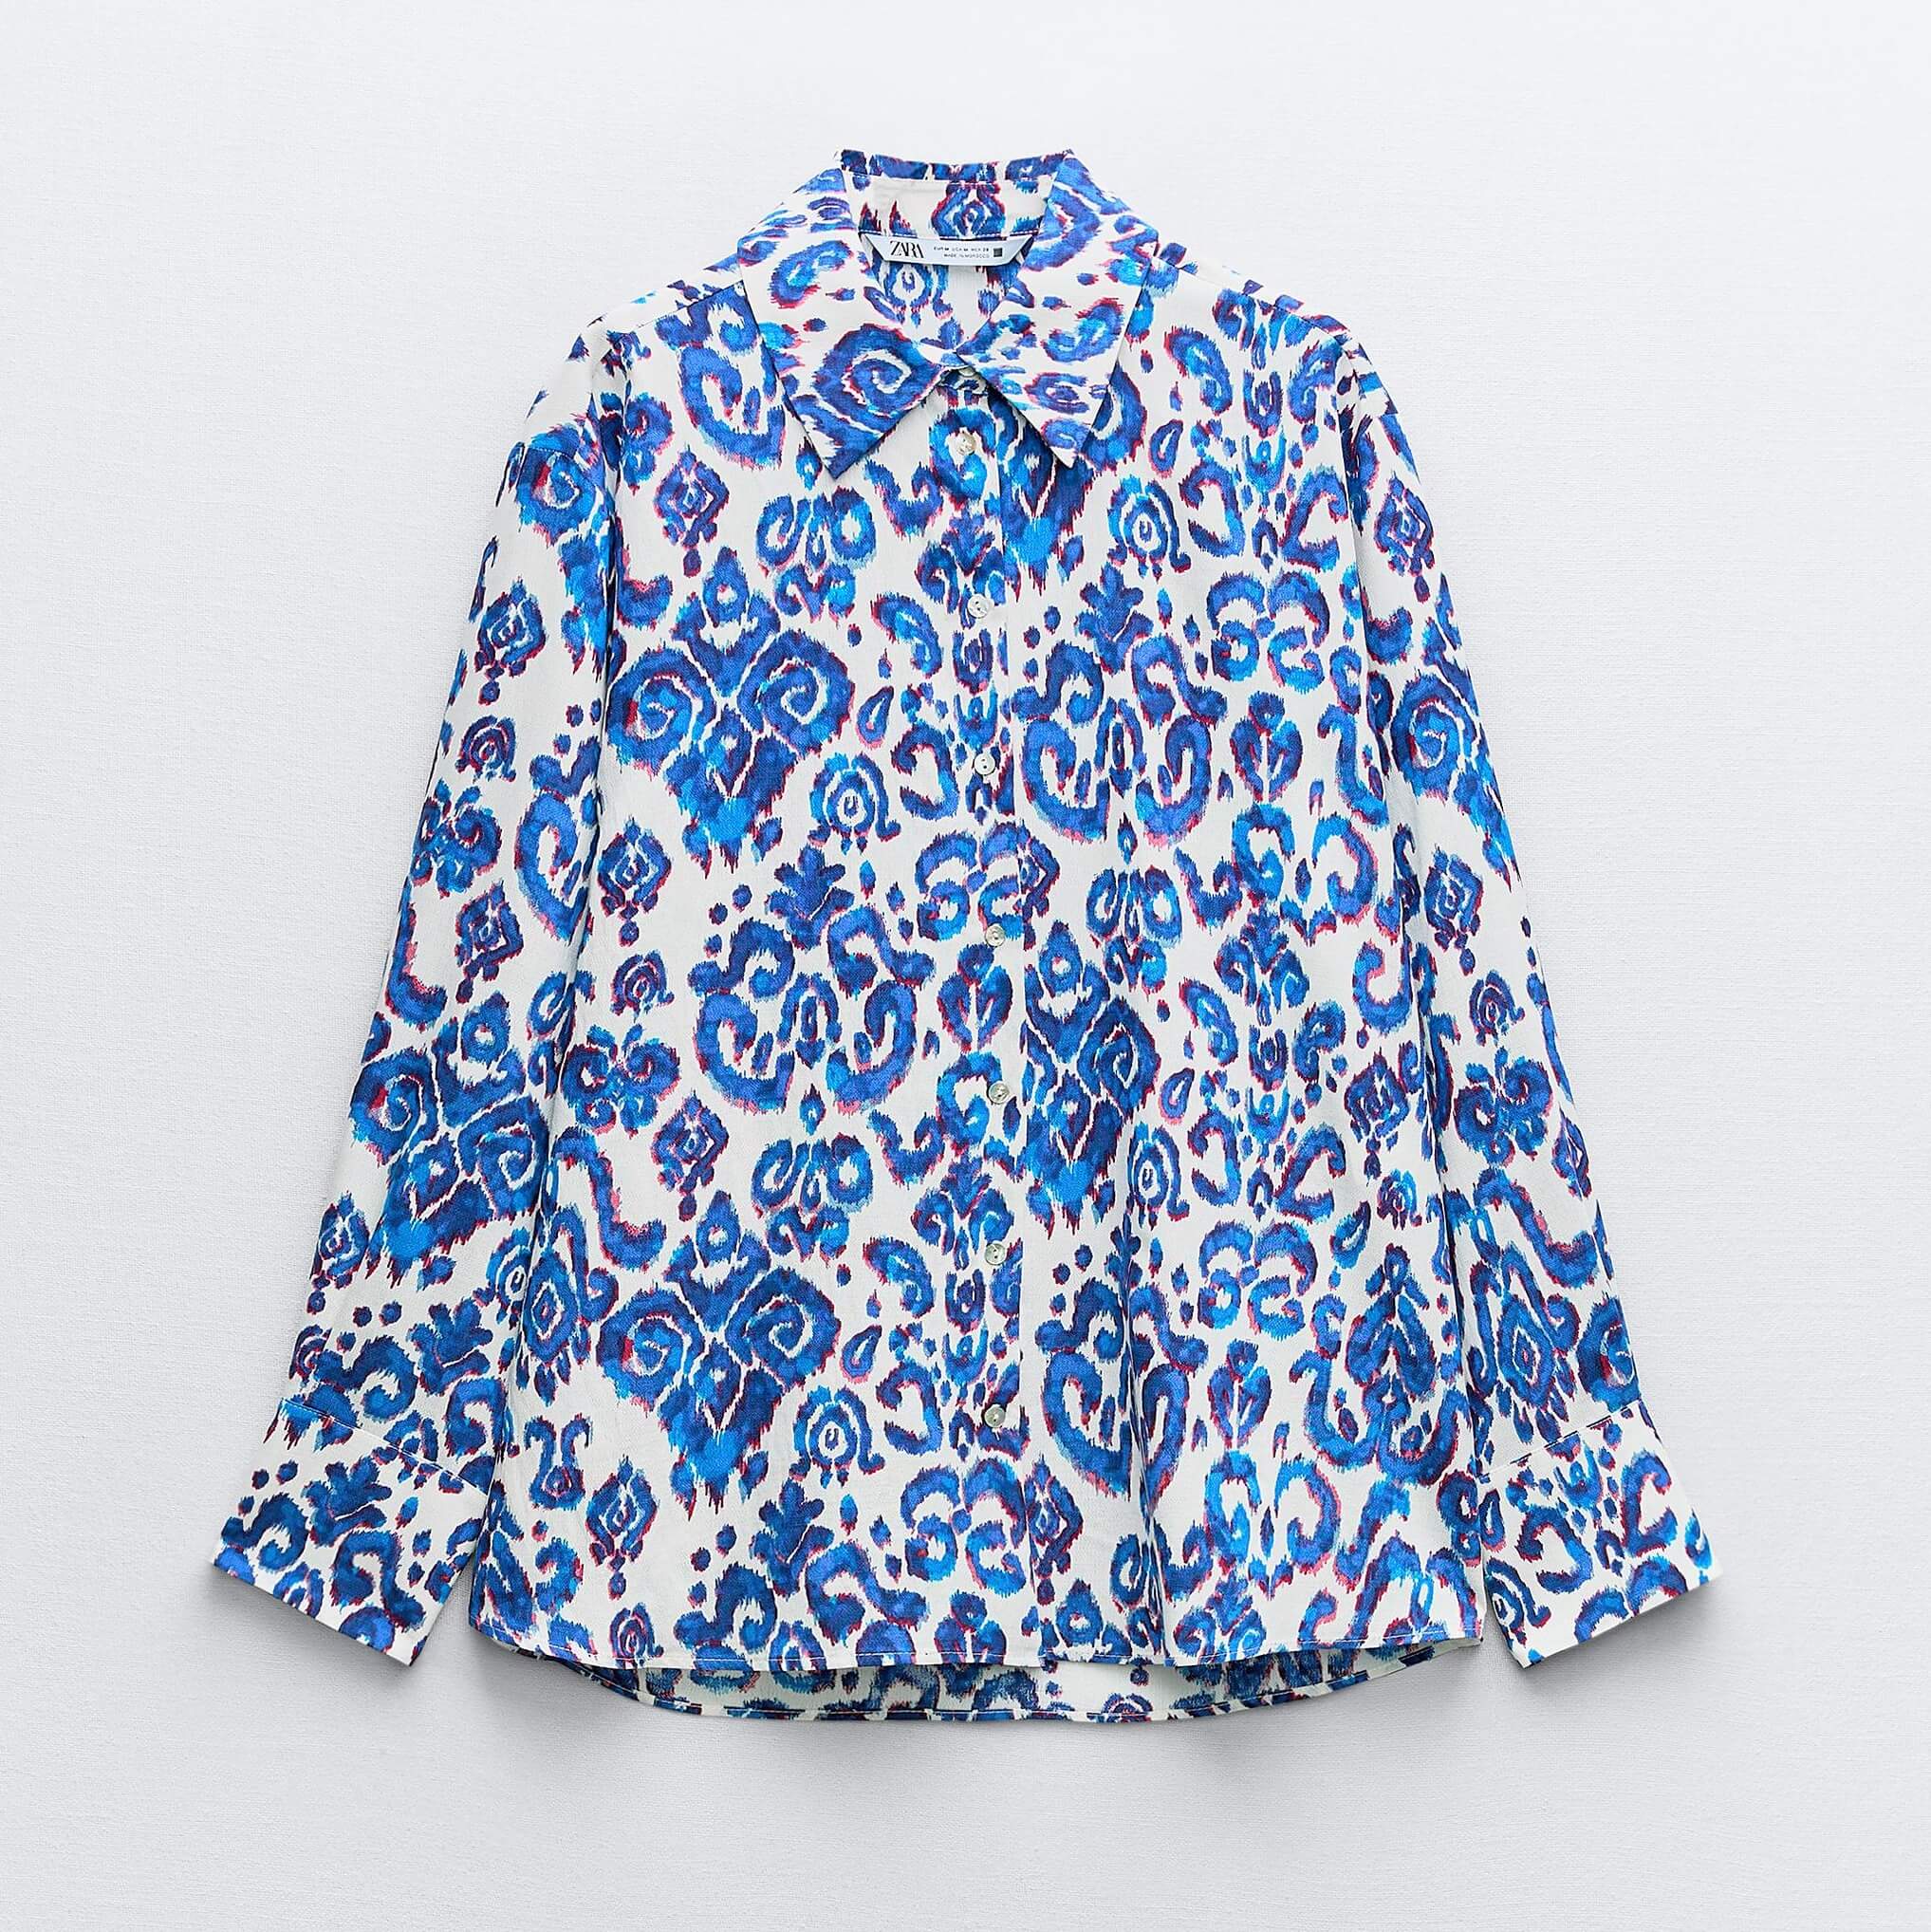 Рубашка Zara Printed, синий/белый рубашка zara printed satin синий белый